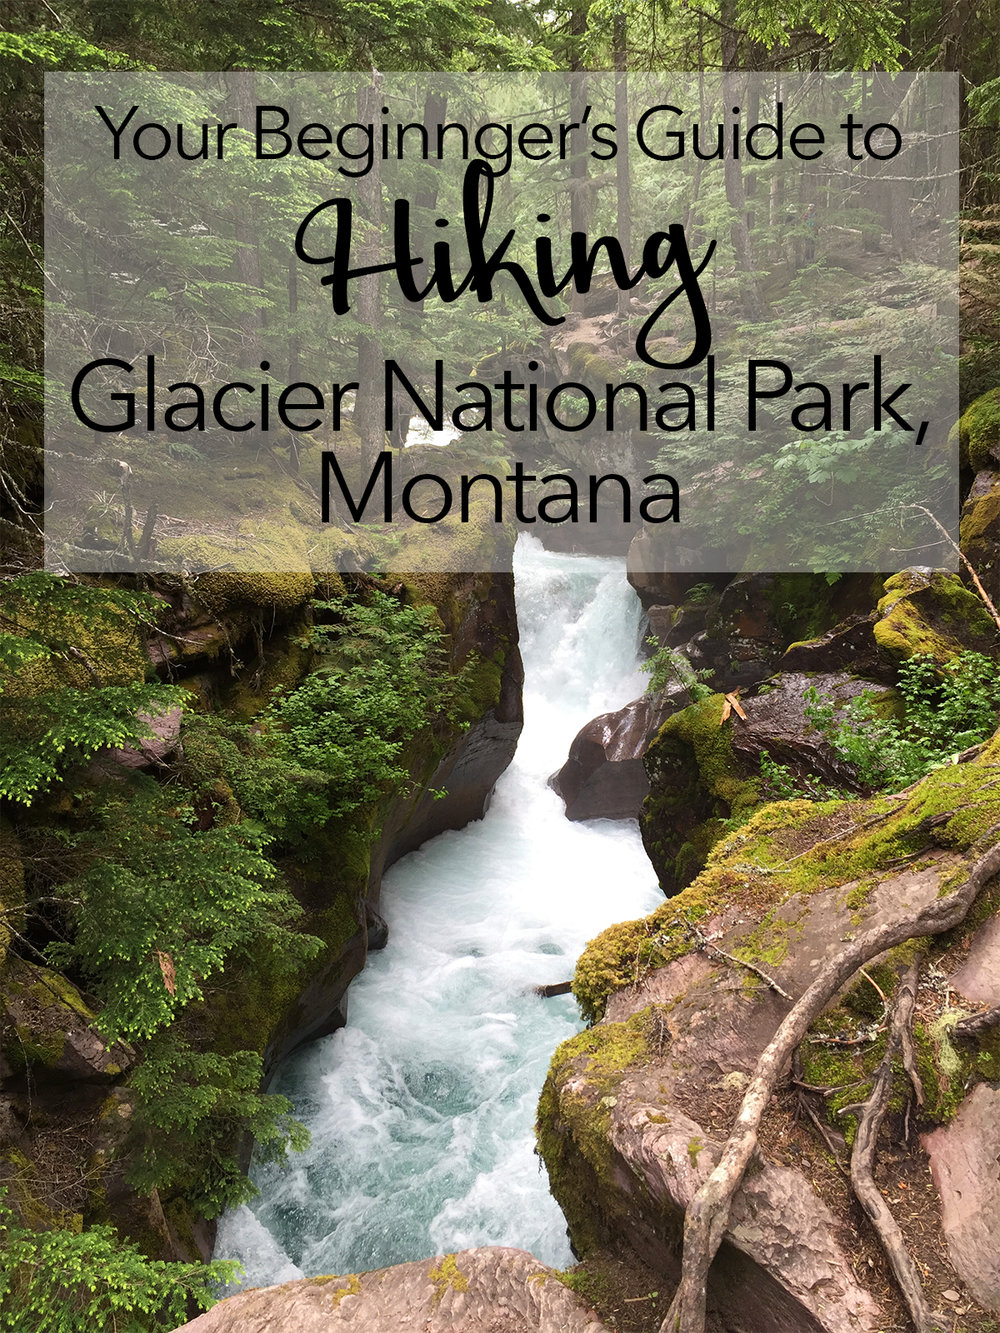 Glacier National Park Hiking recommendations